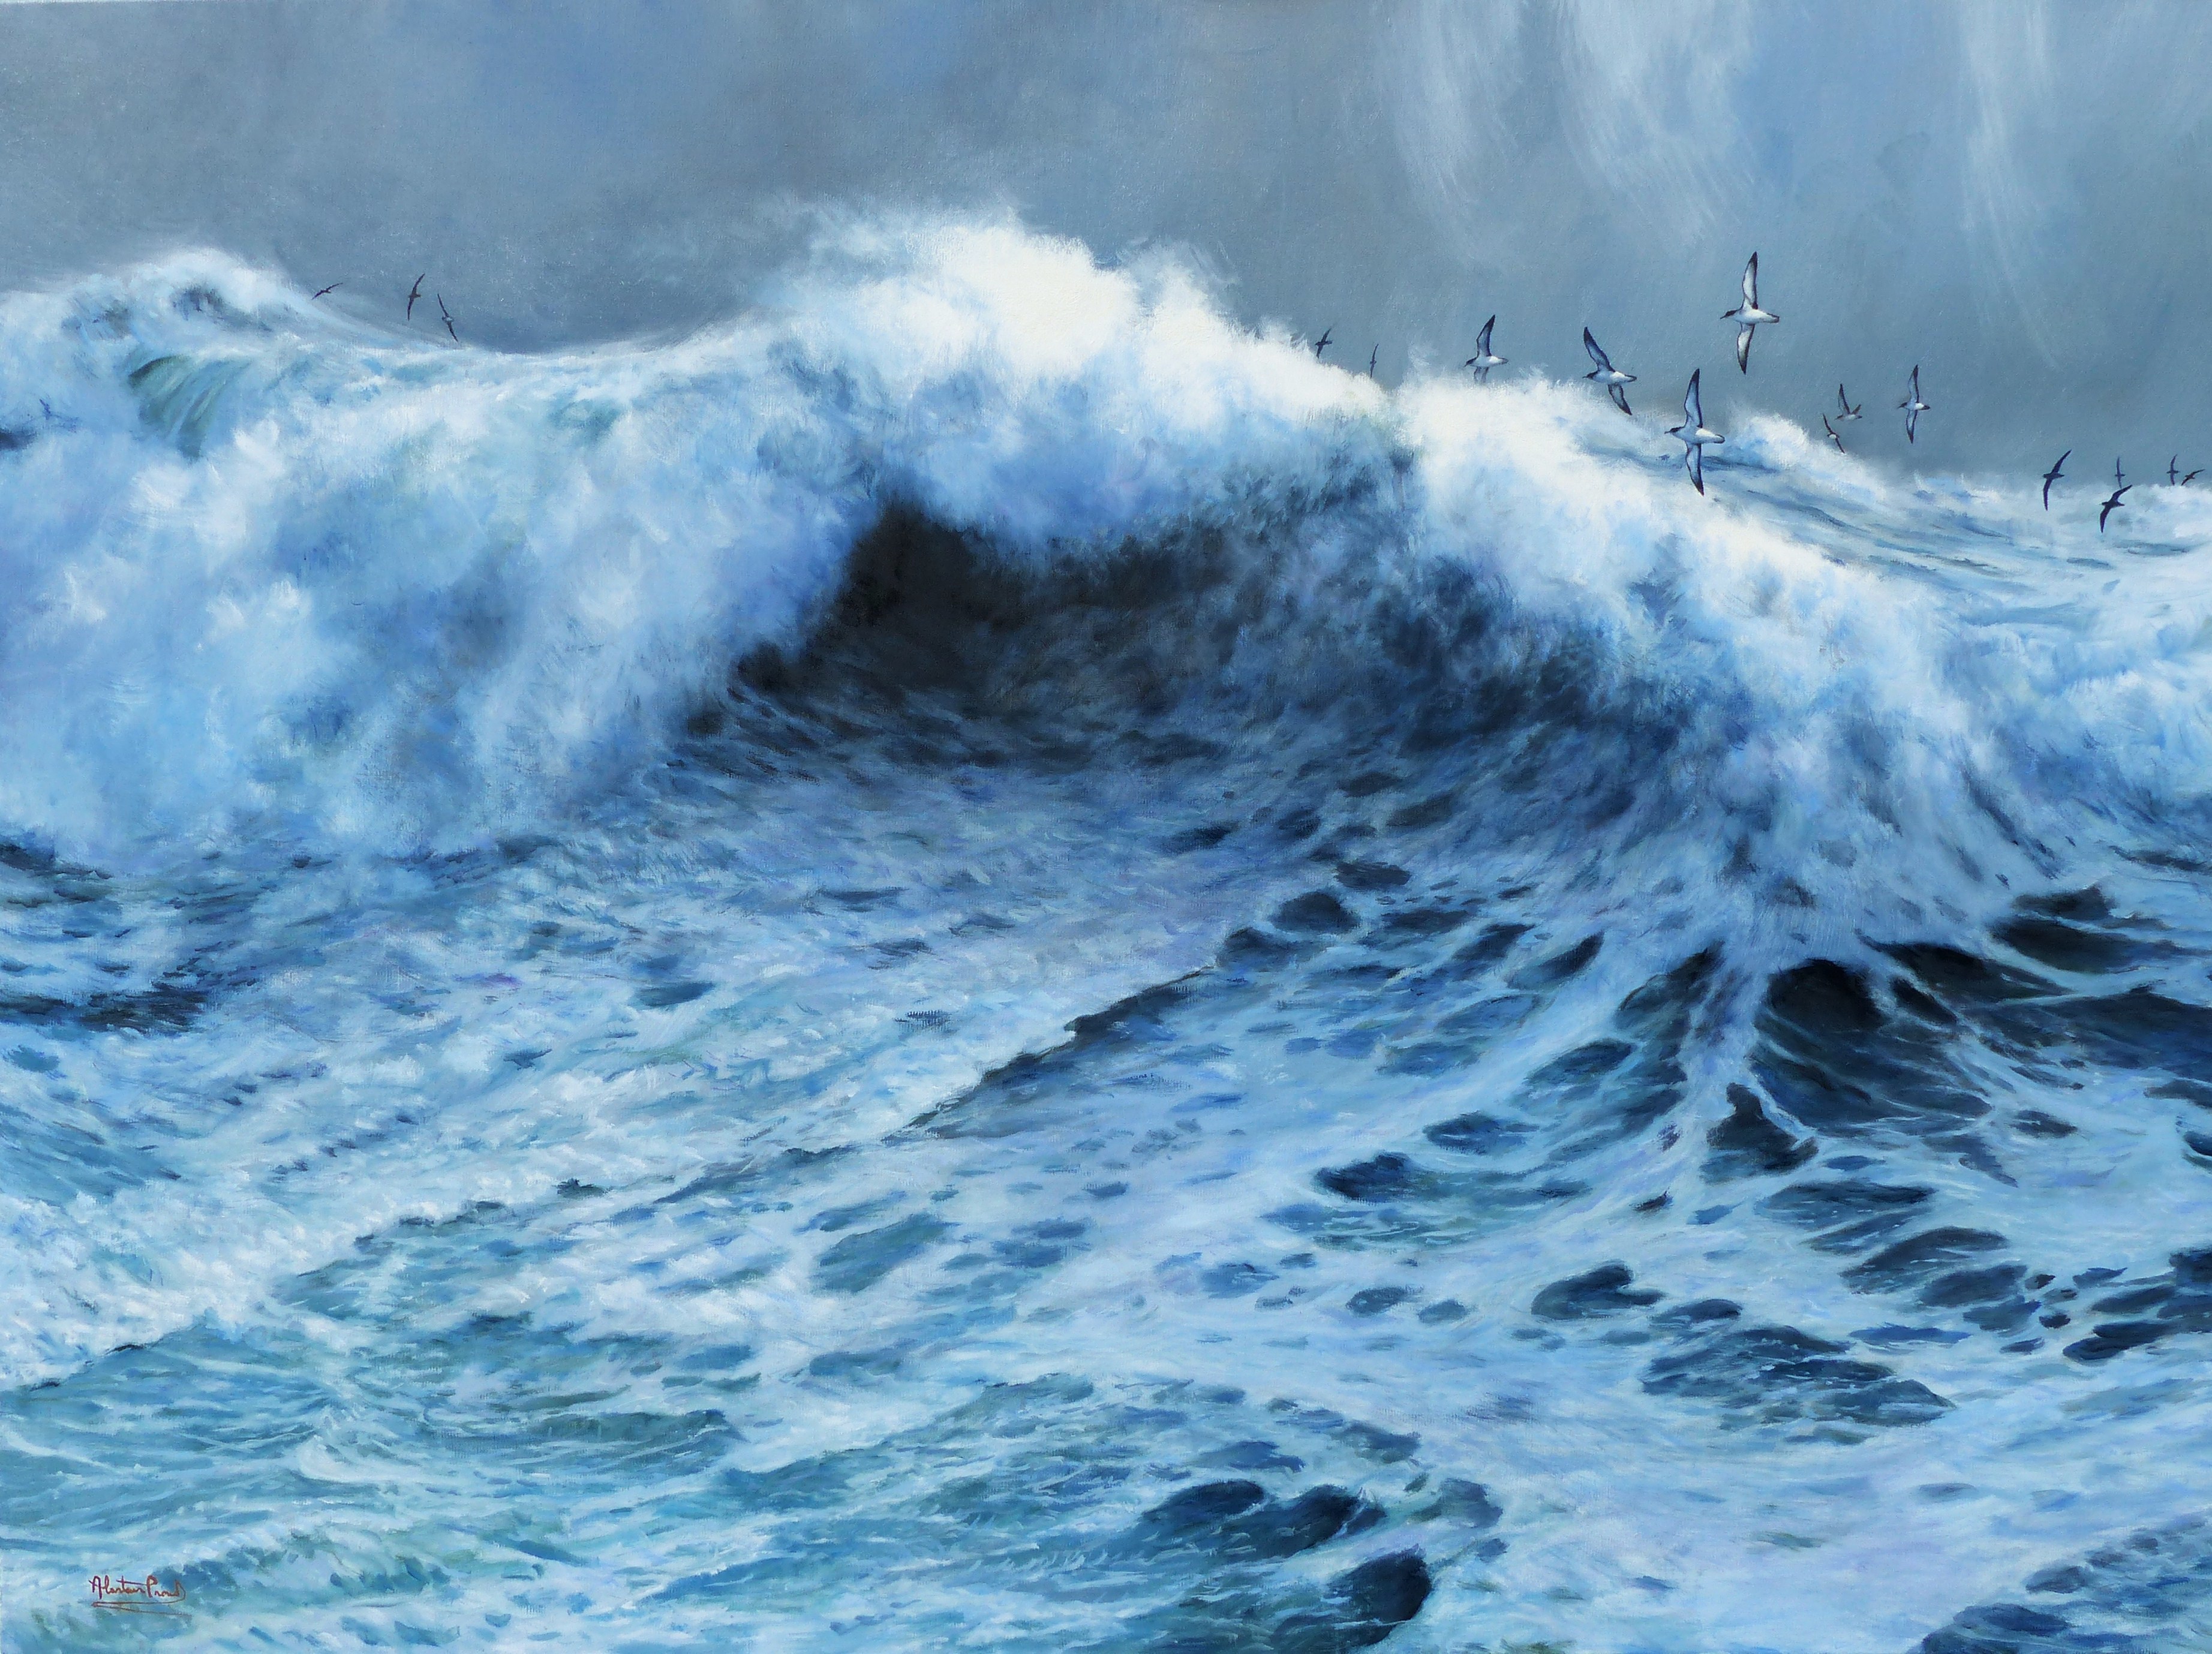   Last light - shearwaters, oil on canvas, 76 cm x 101 cm